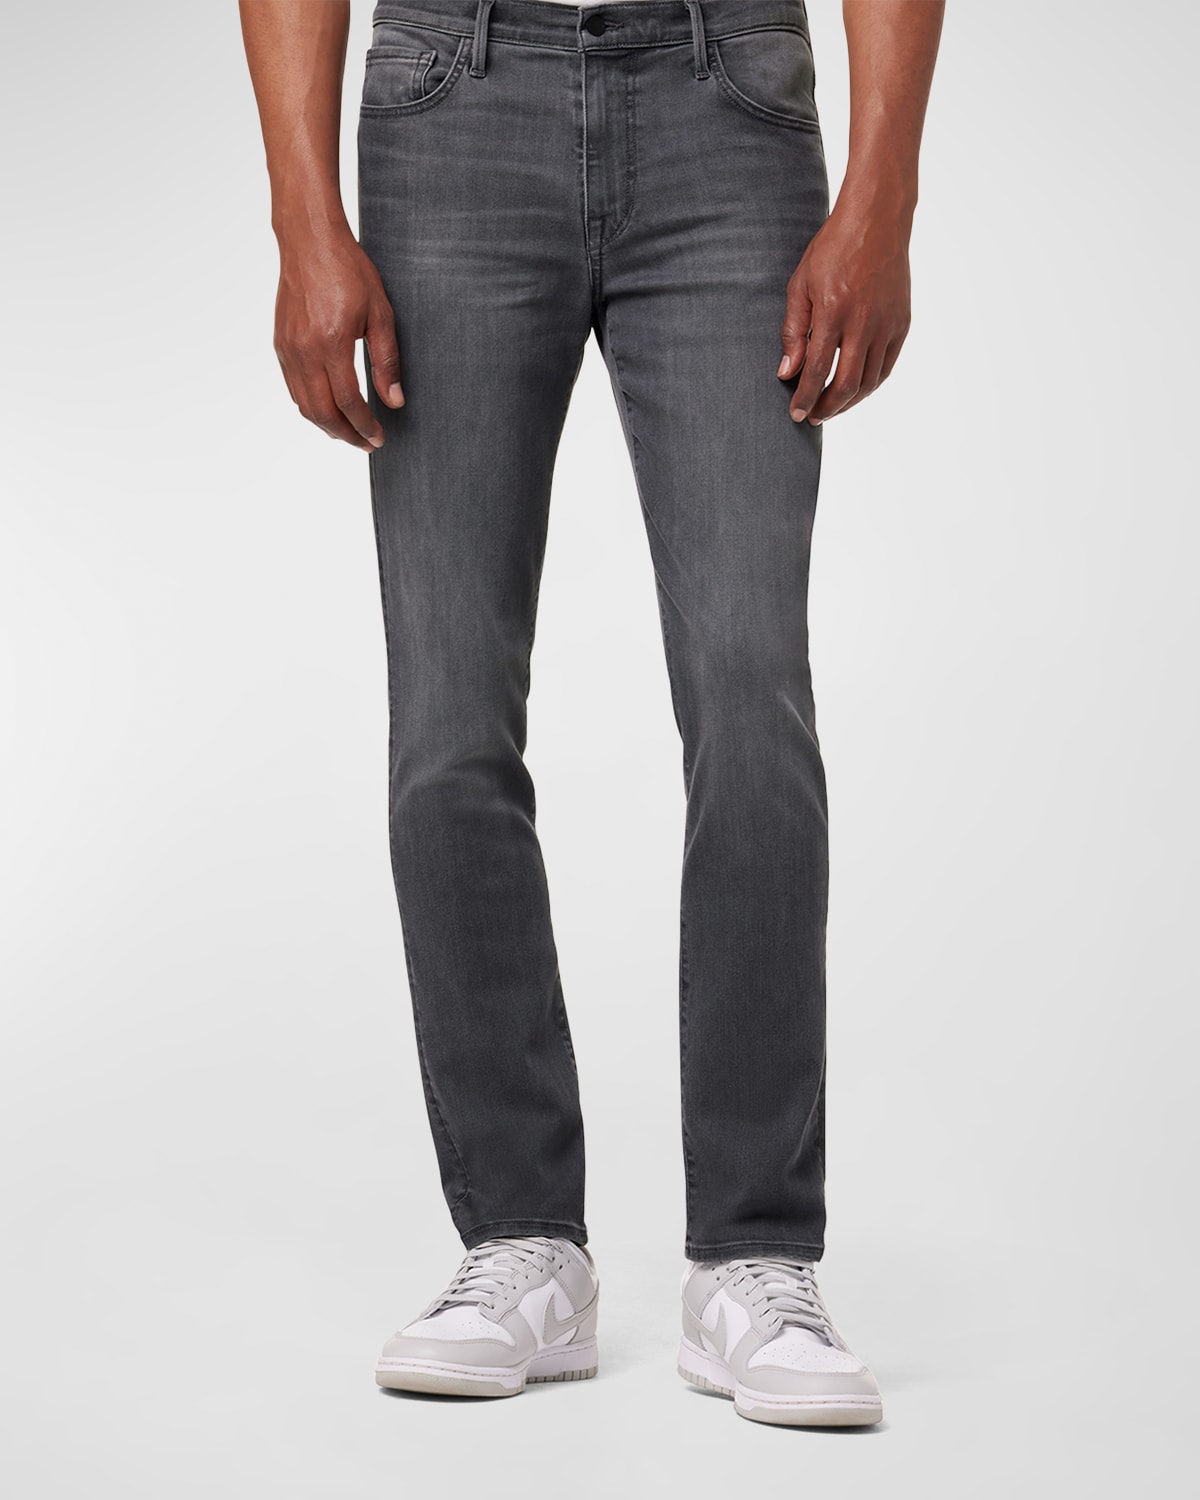 Men's Asher Slim Jeans in Arc, 32" Inseam